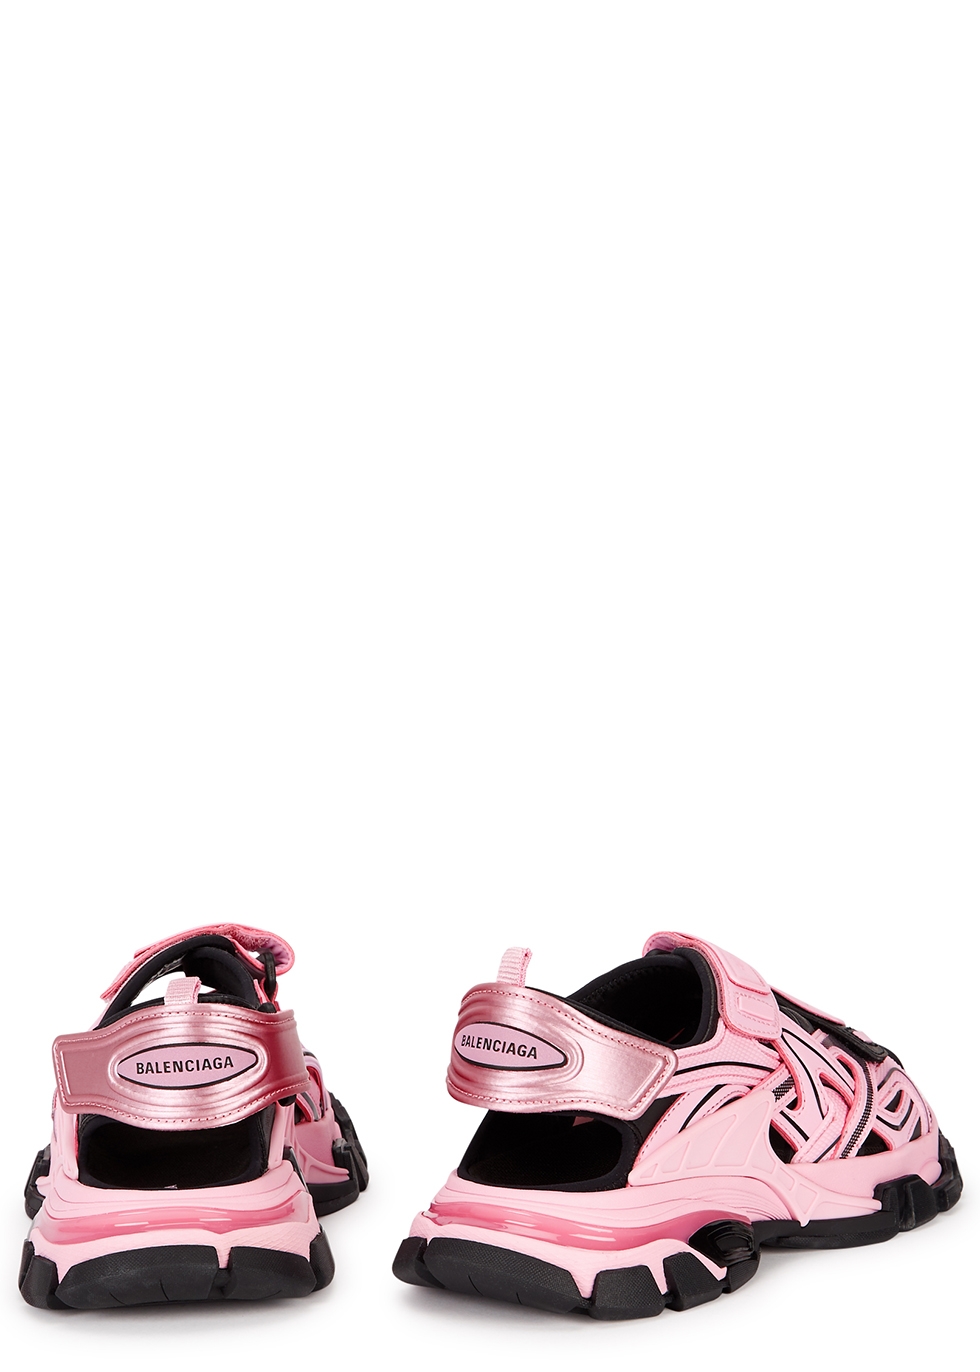 balenciaga pink sandals